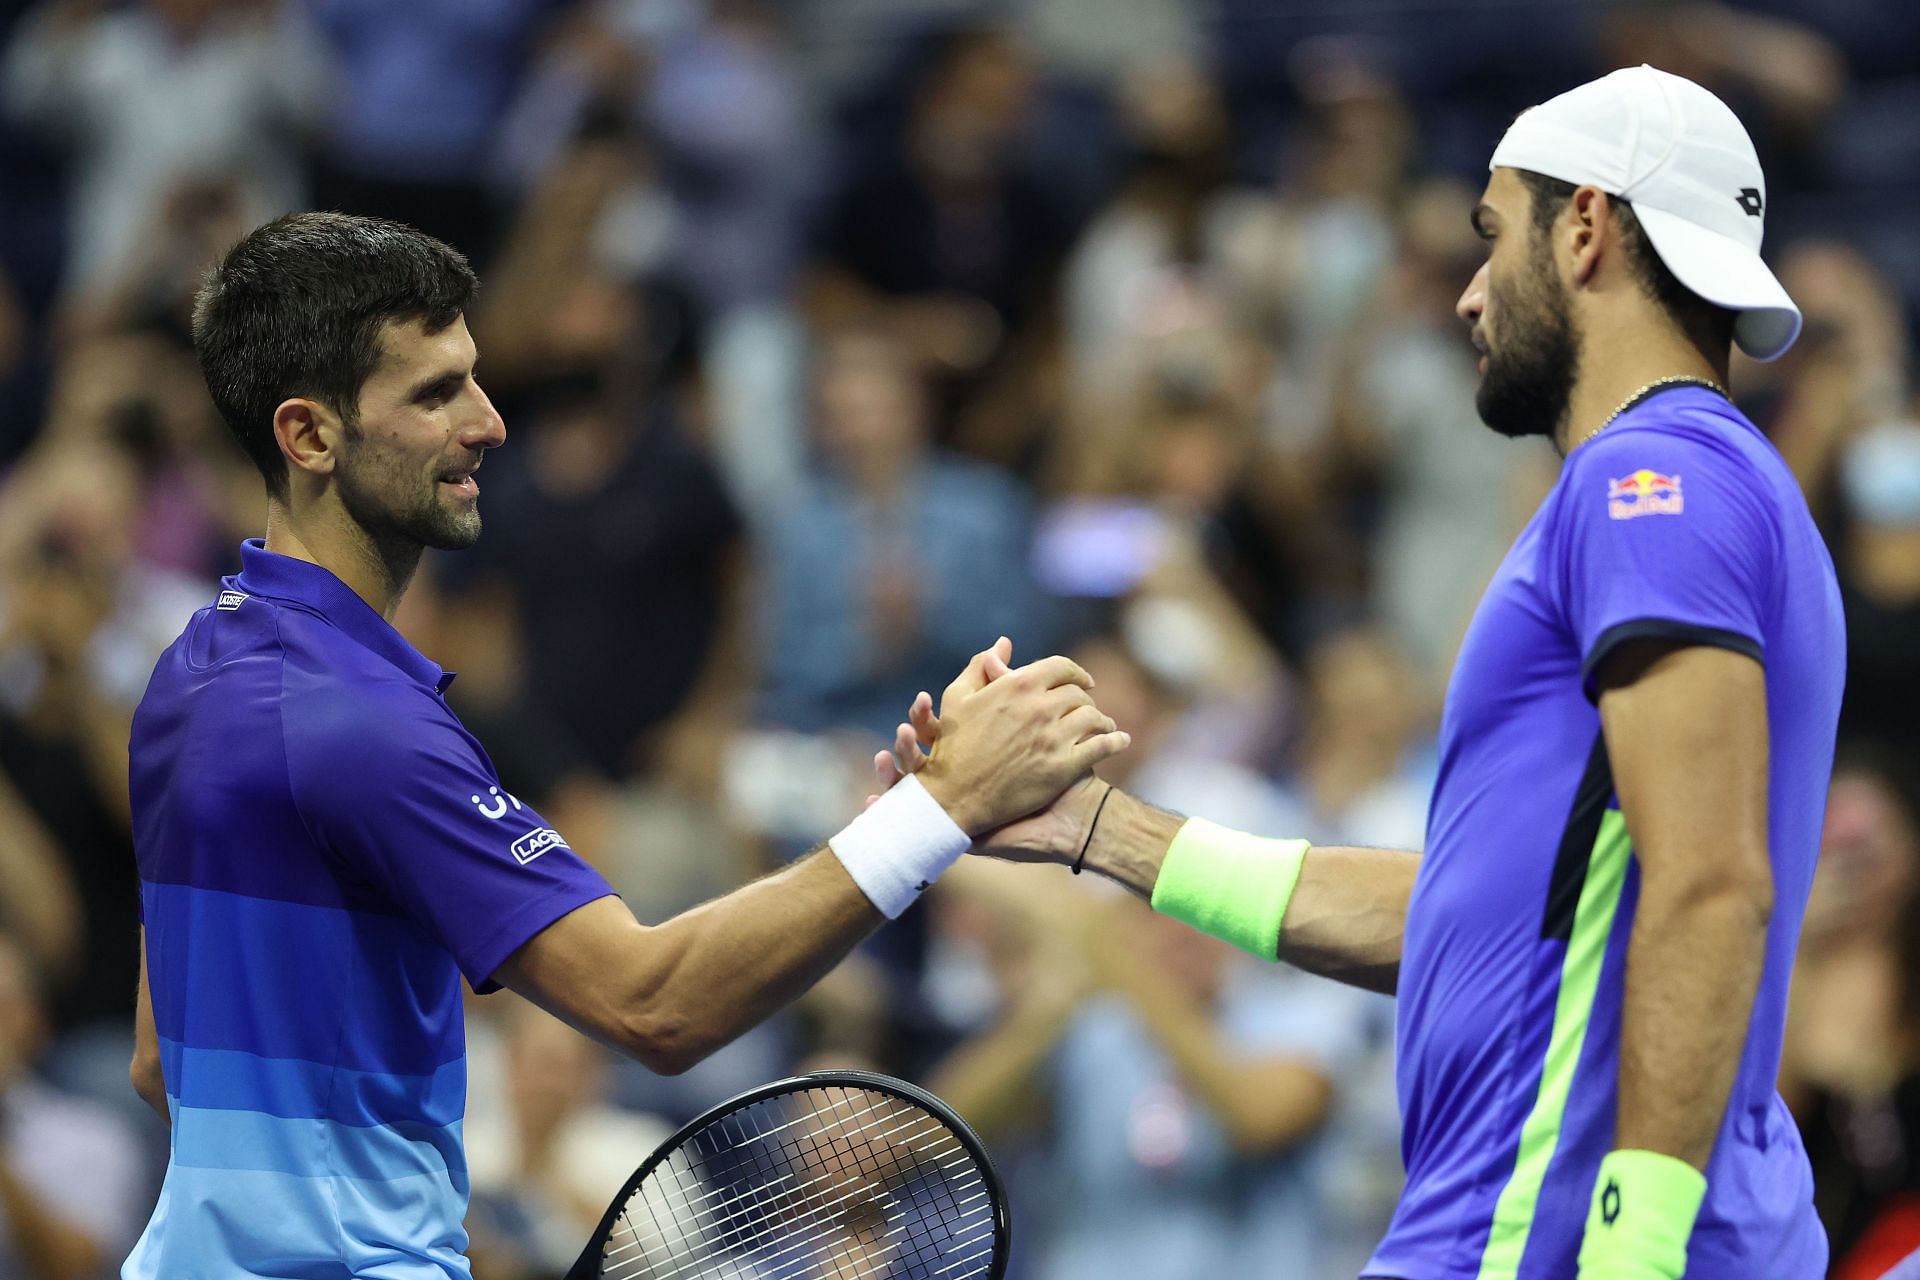 Djokovic and Berrettini at the US Open